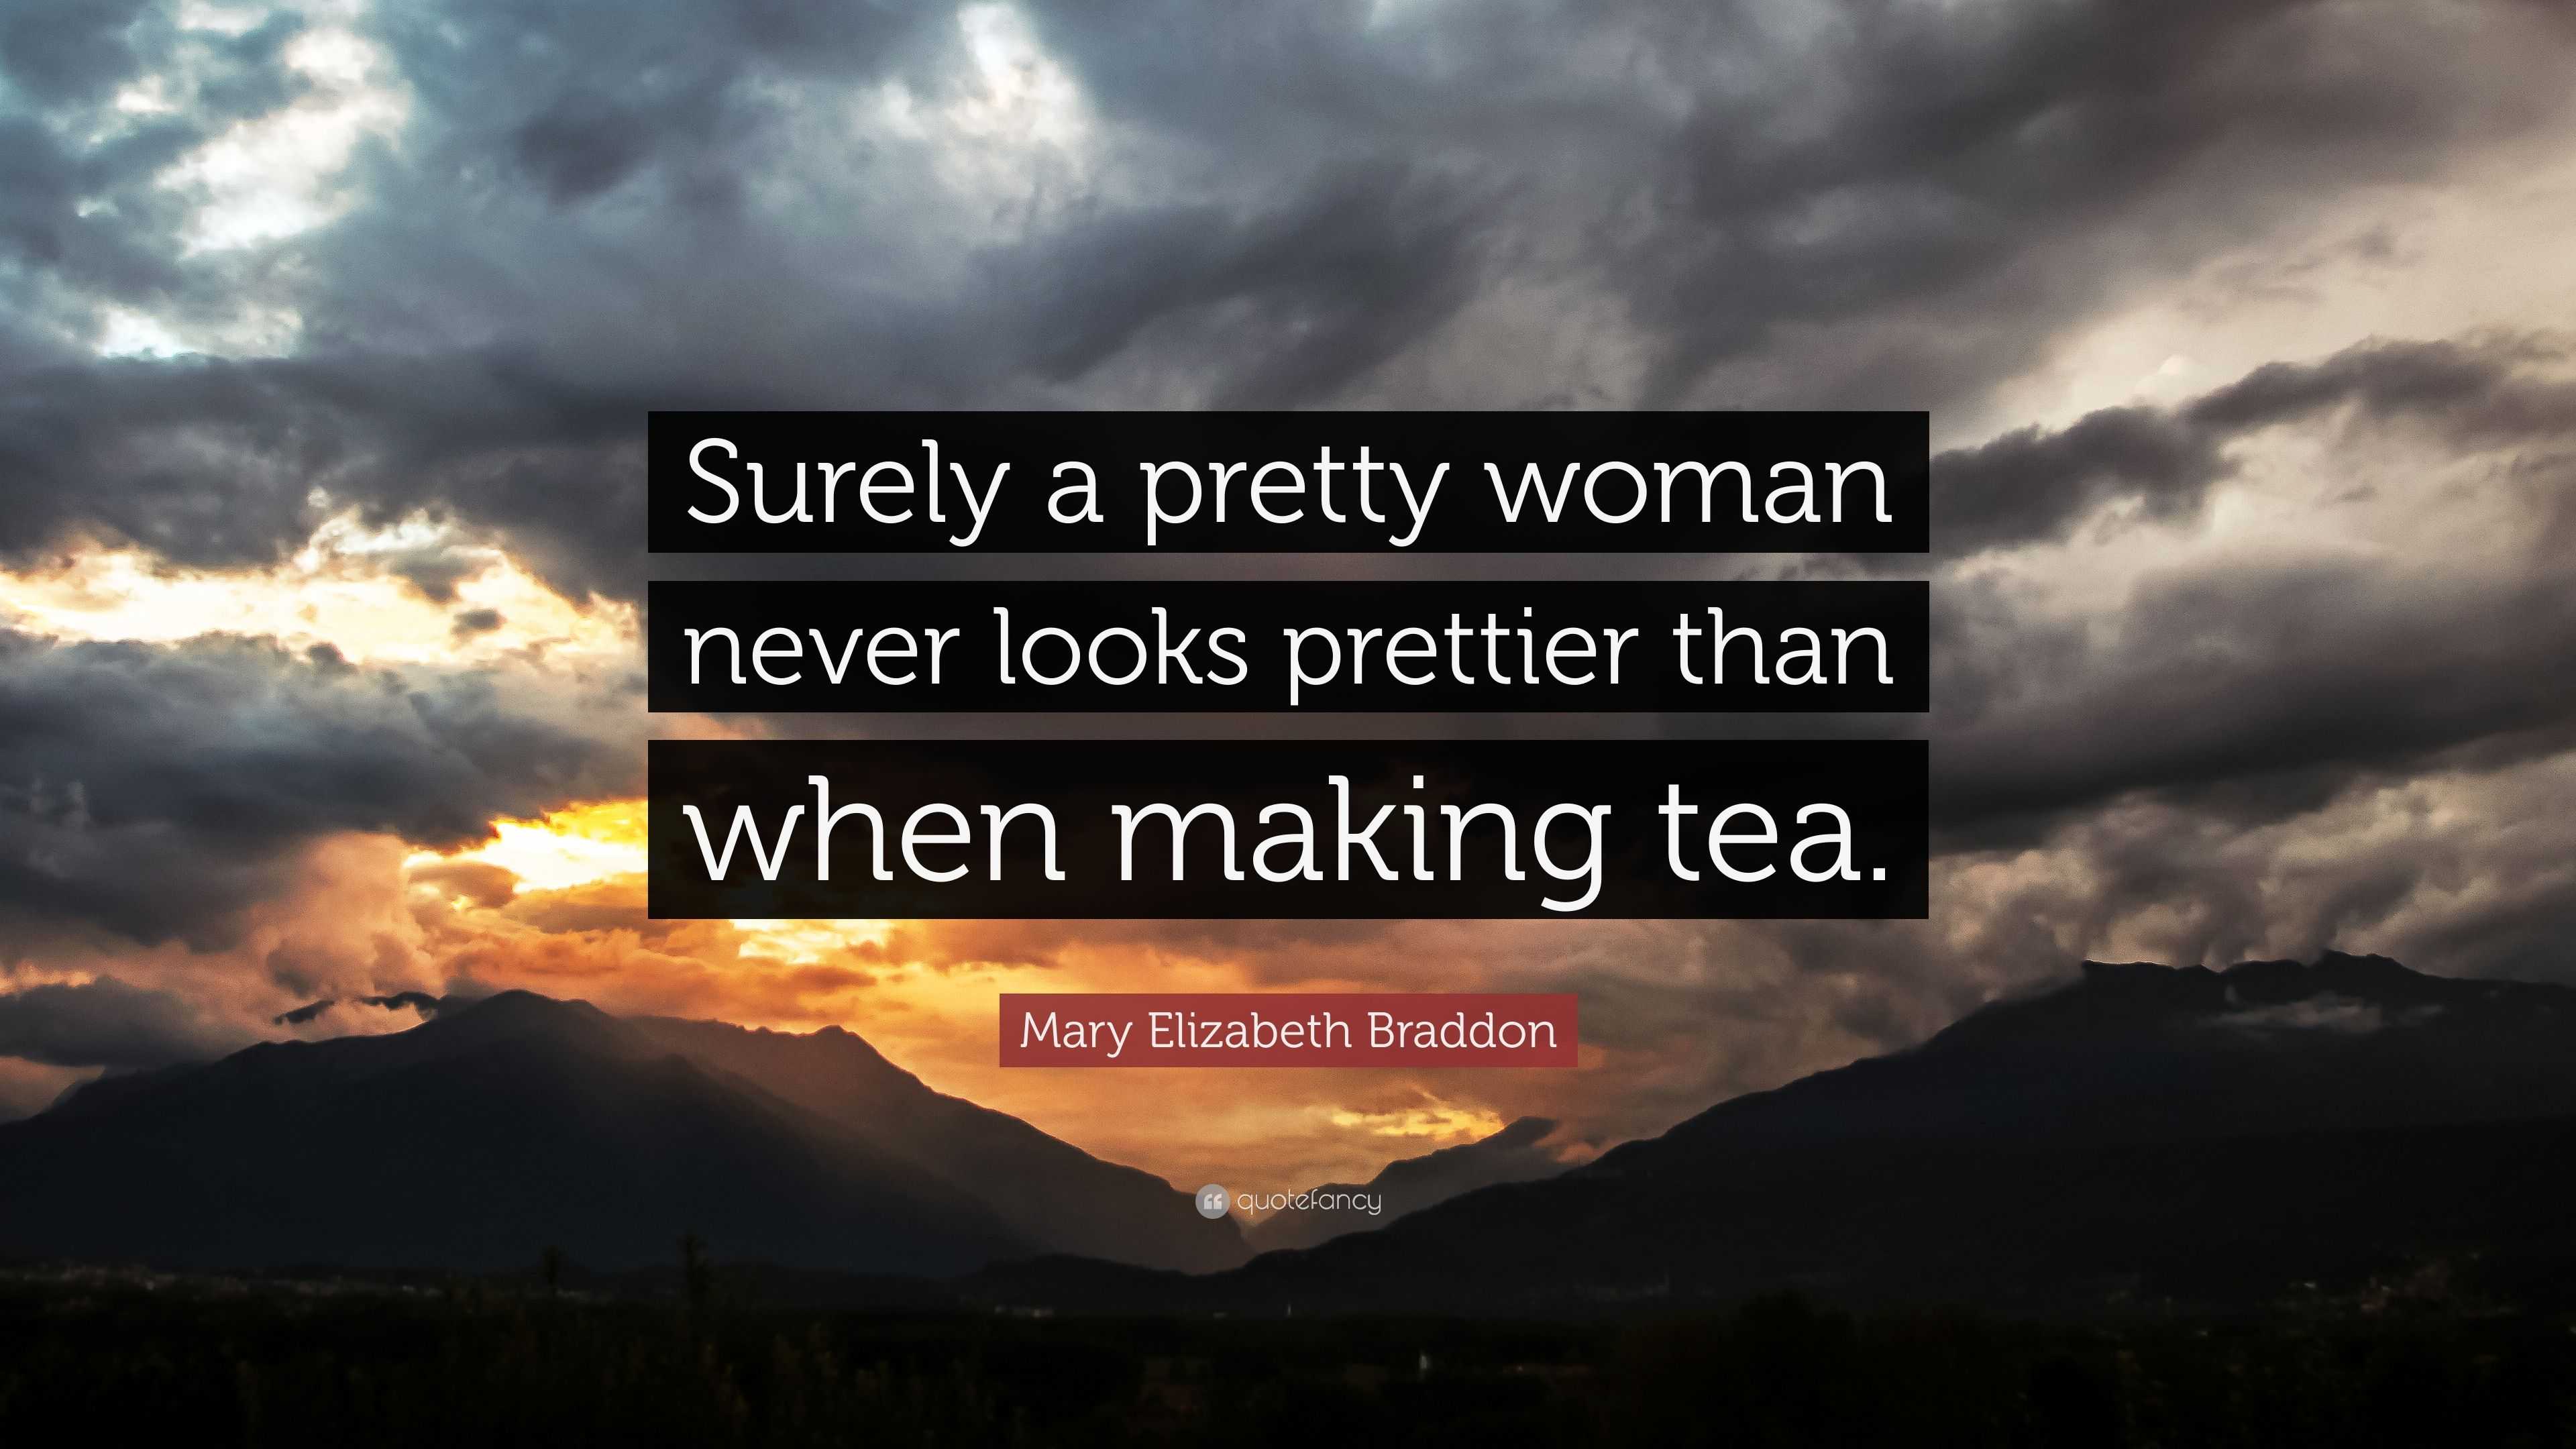 Mary Elizabeth Braddon Quote: “Surely a pretty woman never looks prettier than when making tea.”